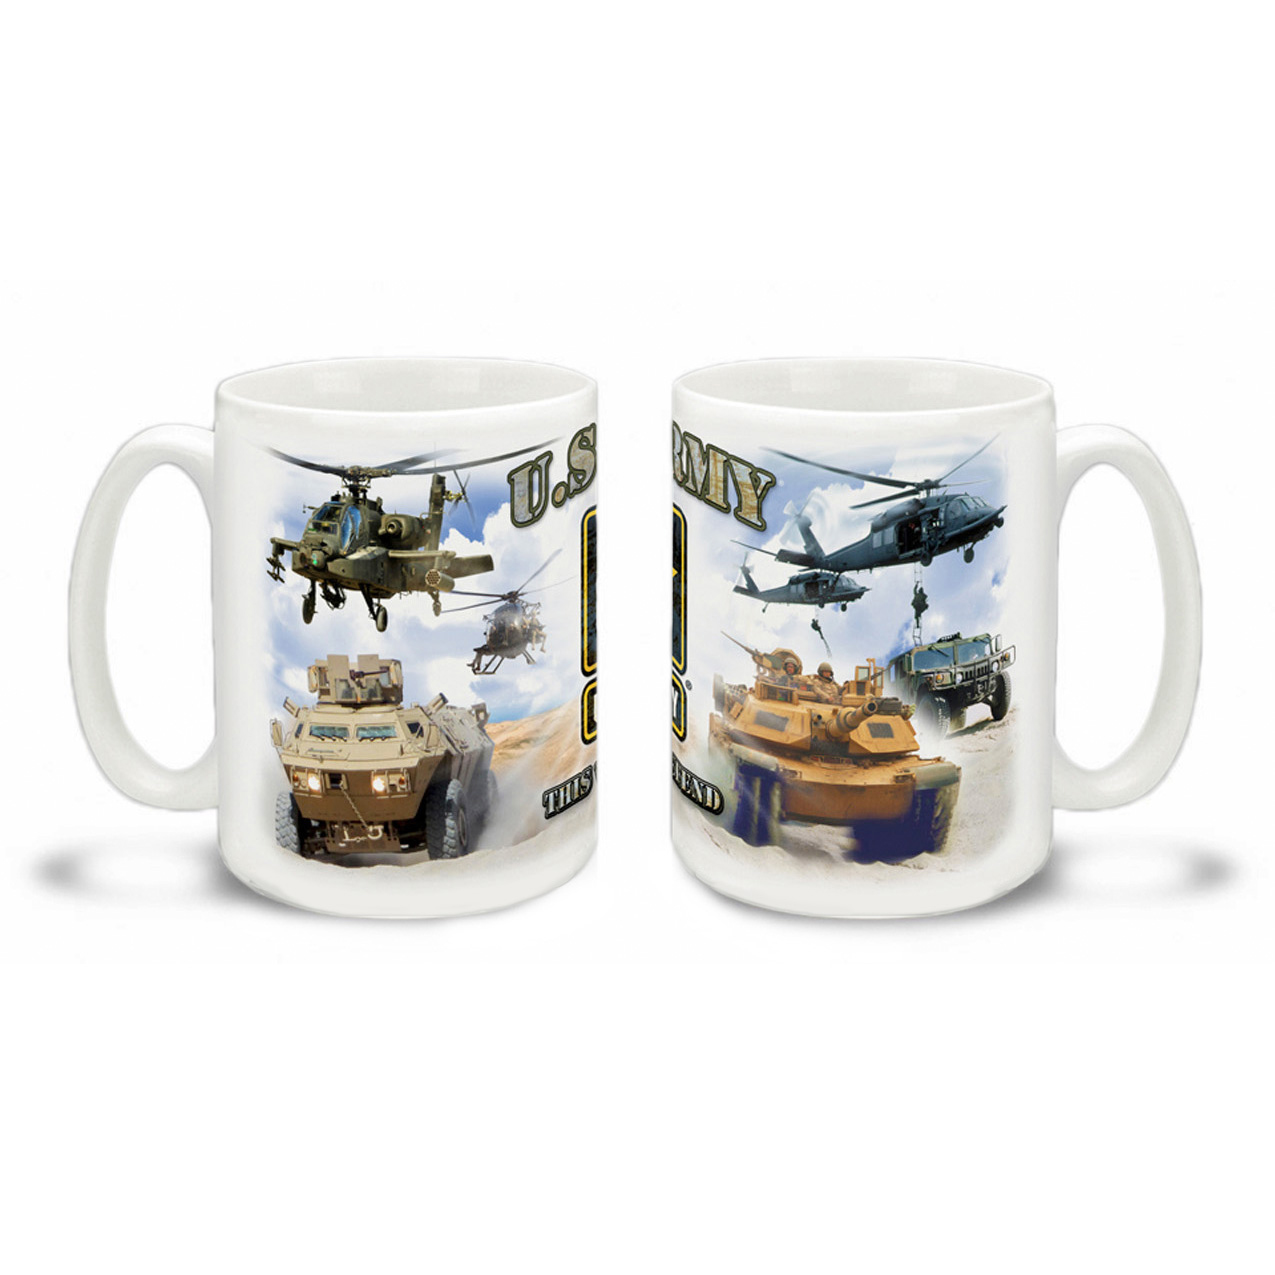 U.S. Army Coffee Mug